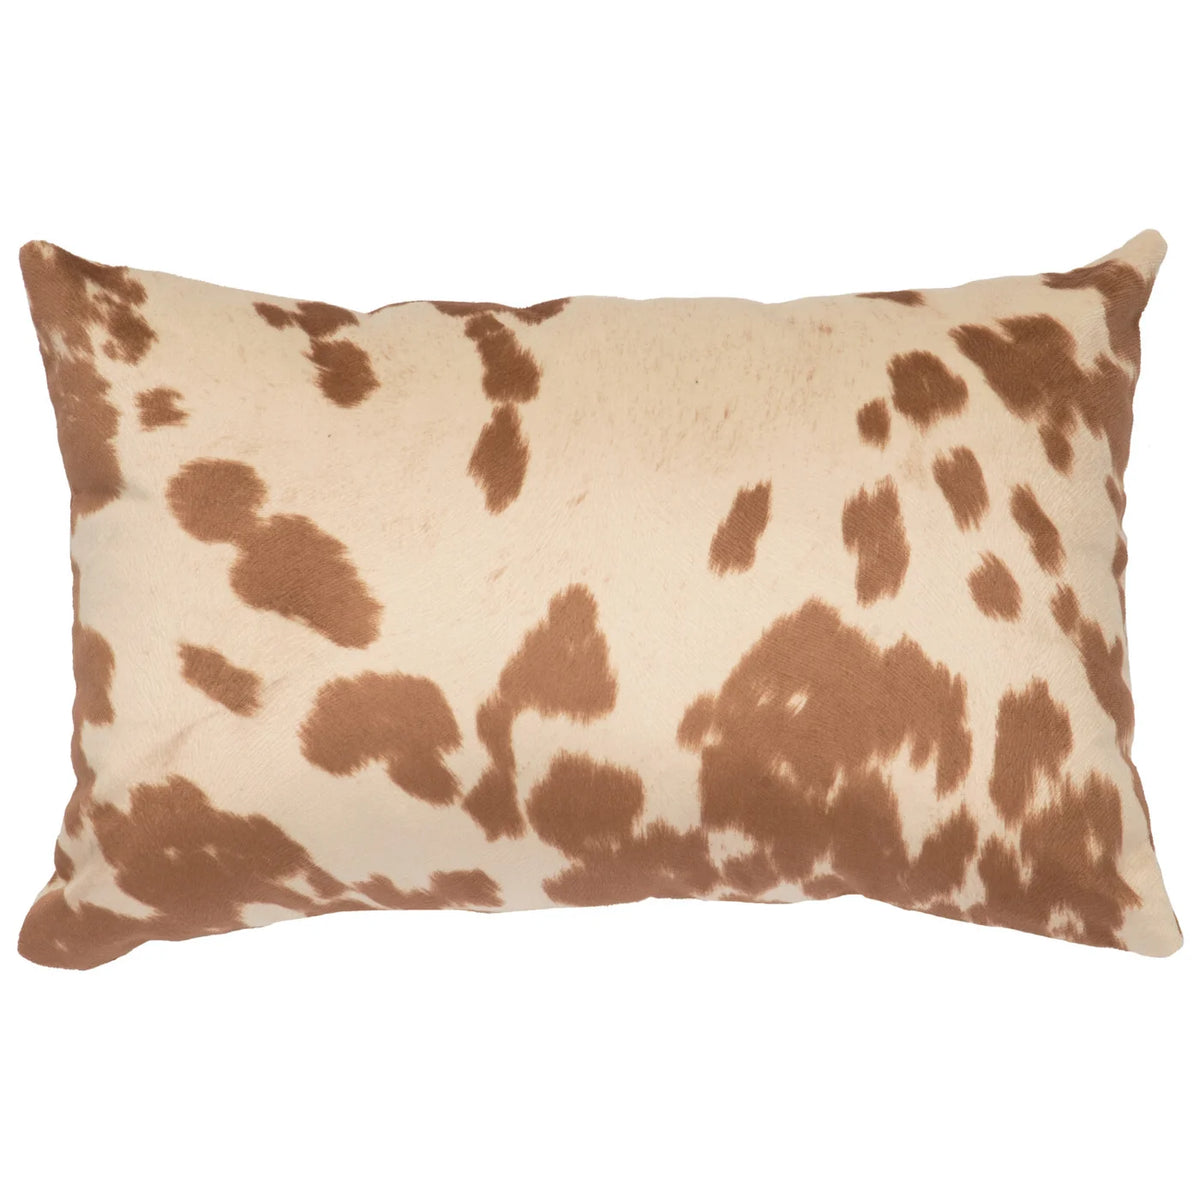 Udder Cream Decorative Pillow